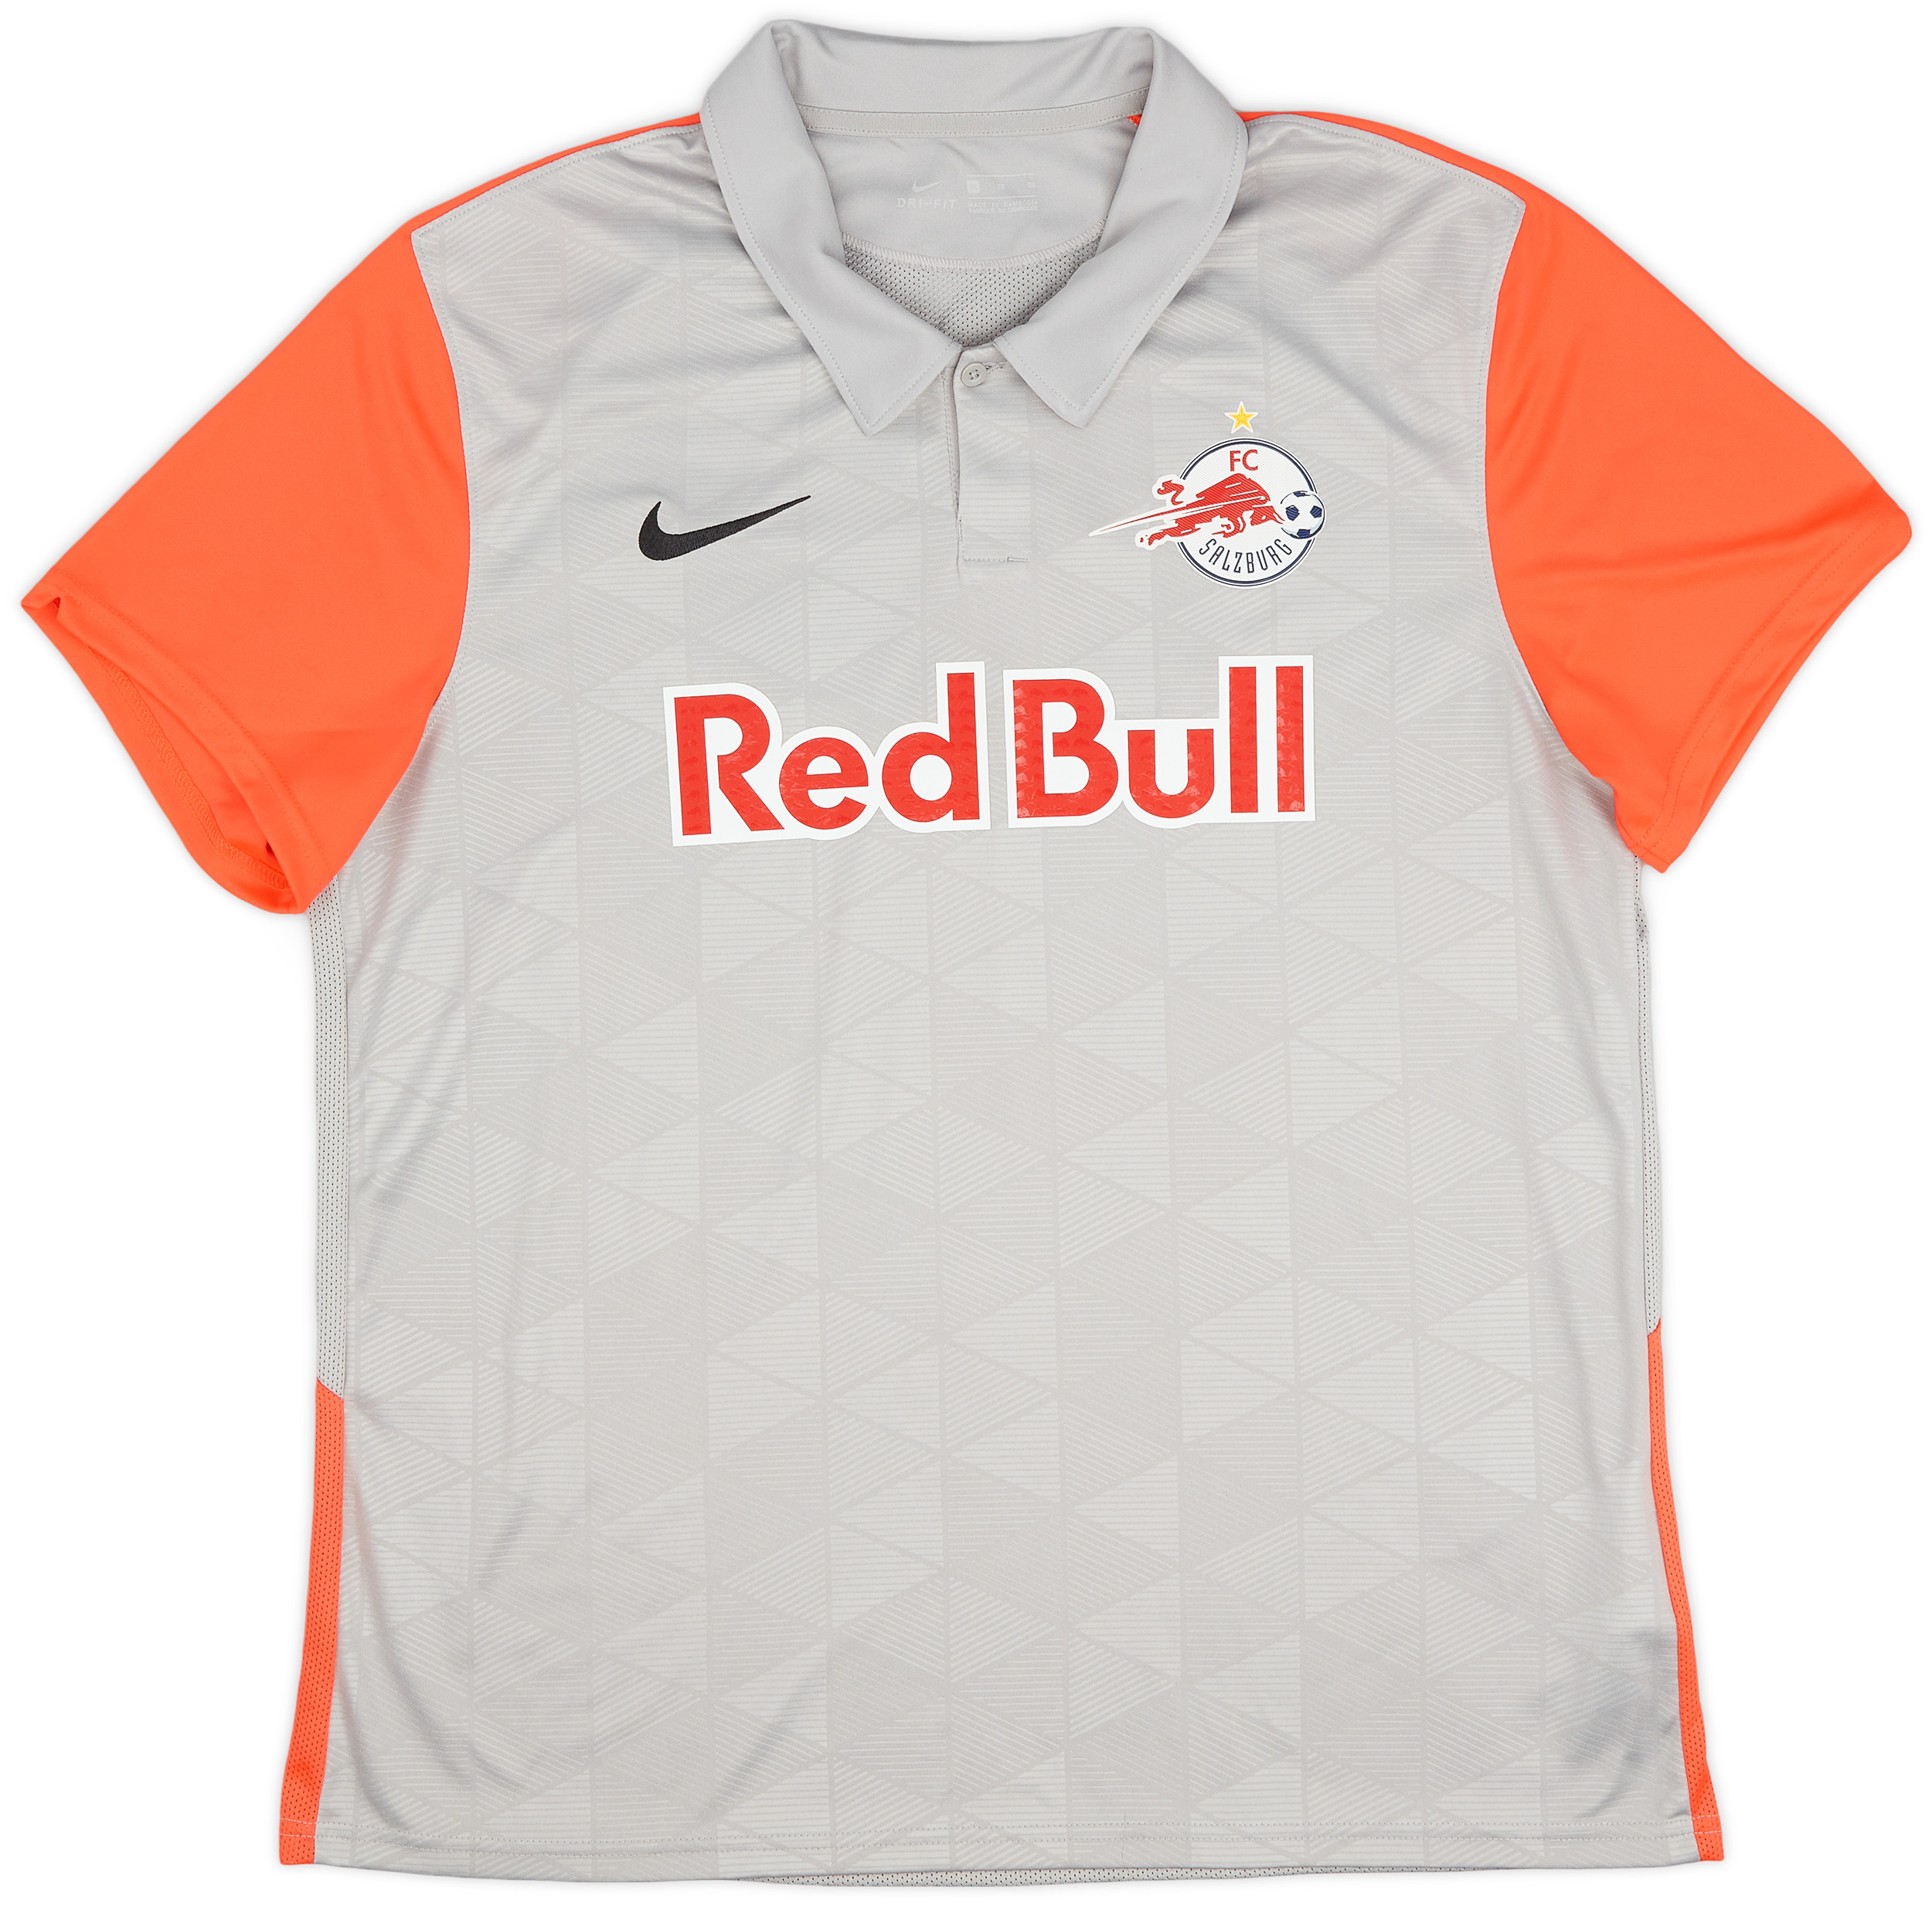 Red Bull Salzburg  Uit  shirt  (Original)